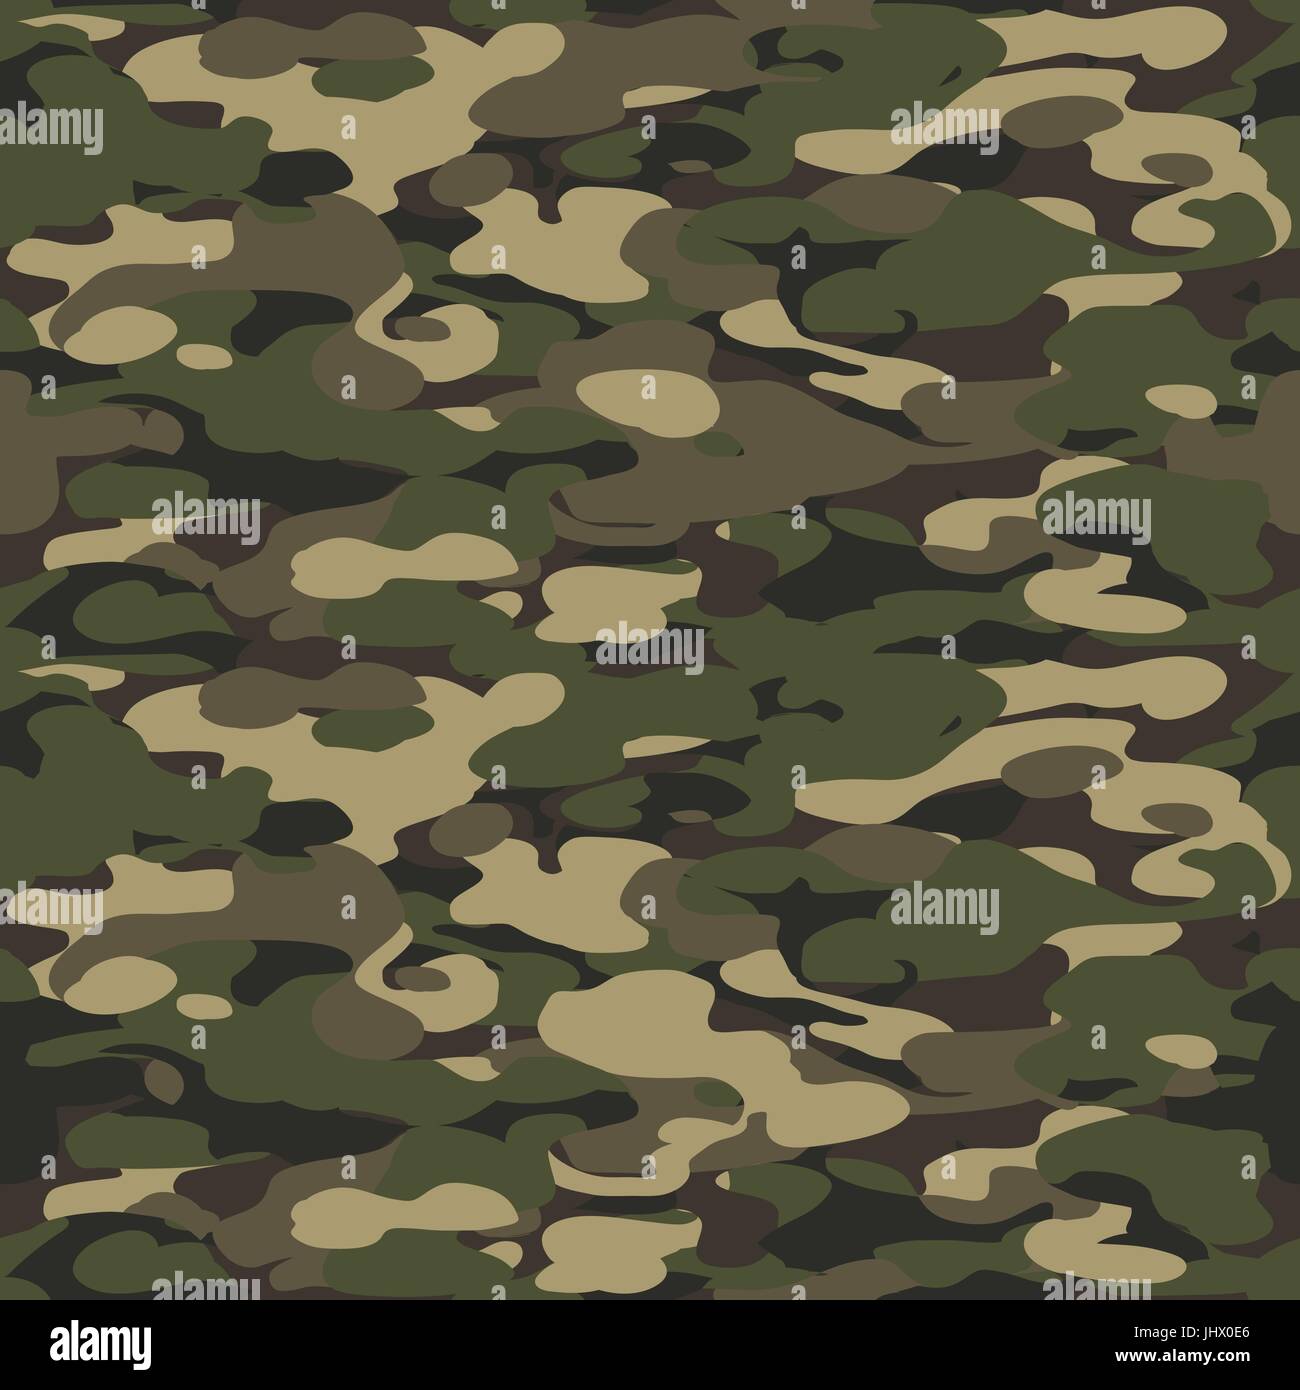 Forest texture Background transparent. Camouflage background seamless vector illustration. Illustration de Vecteur